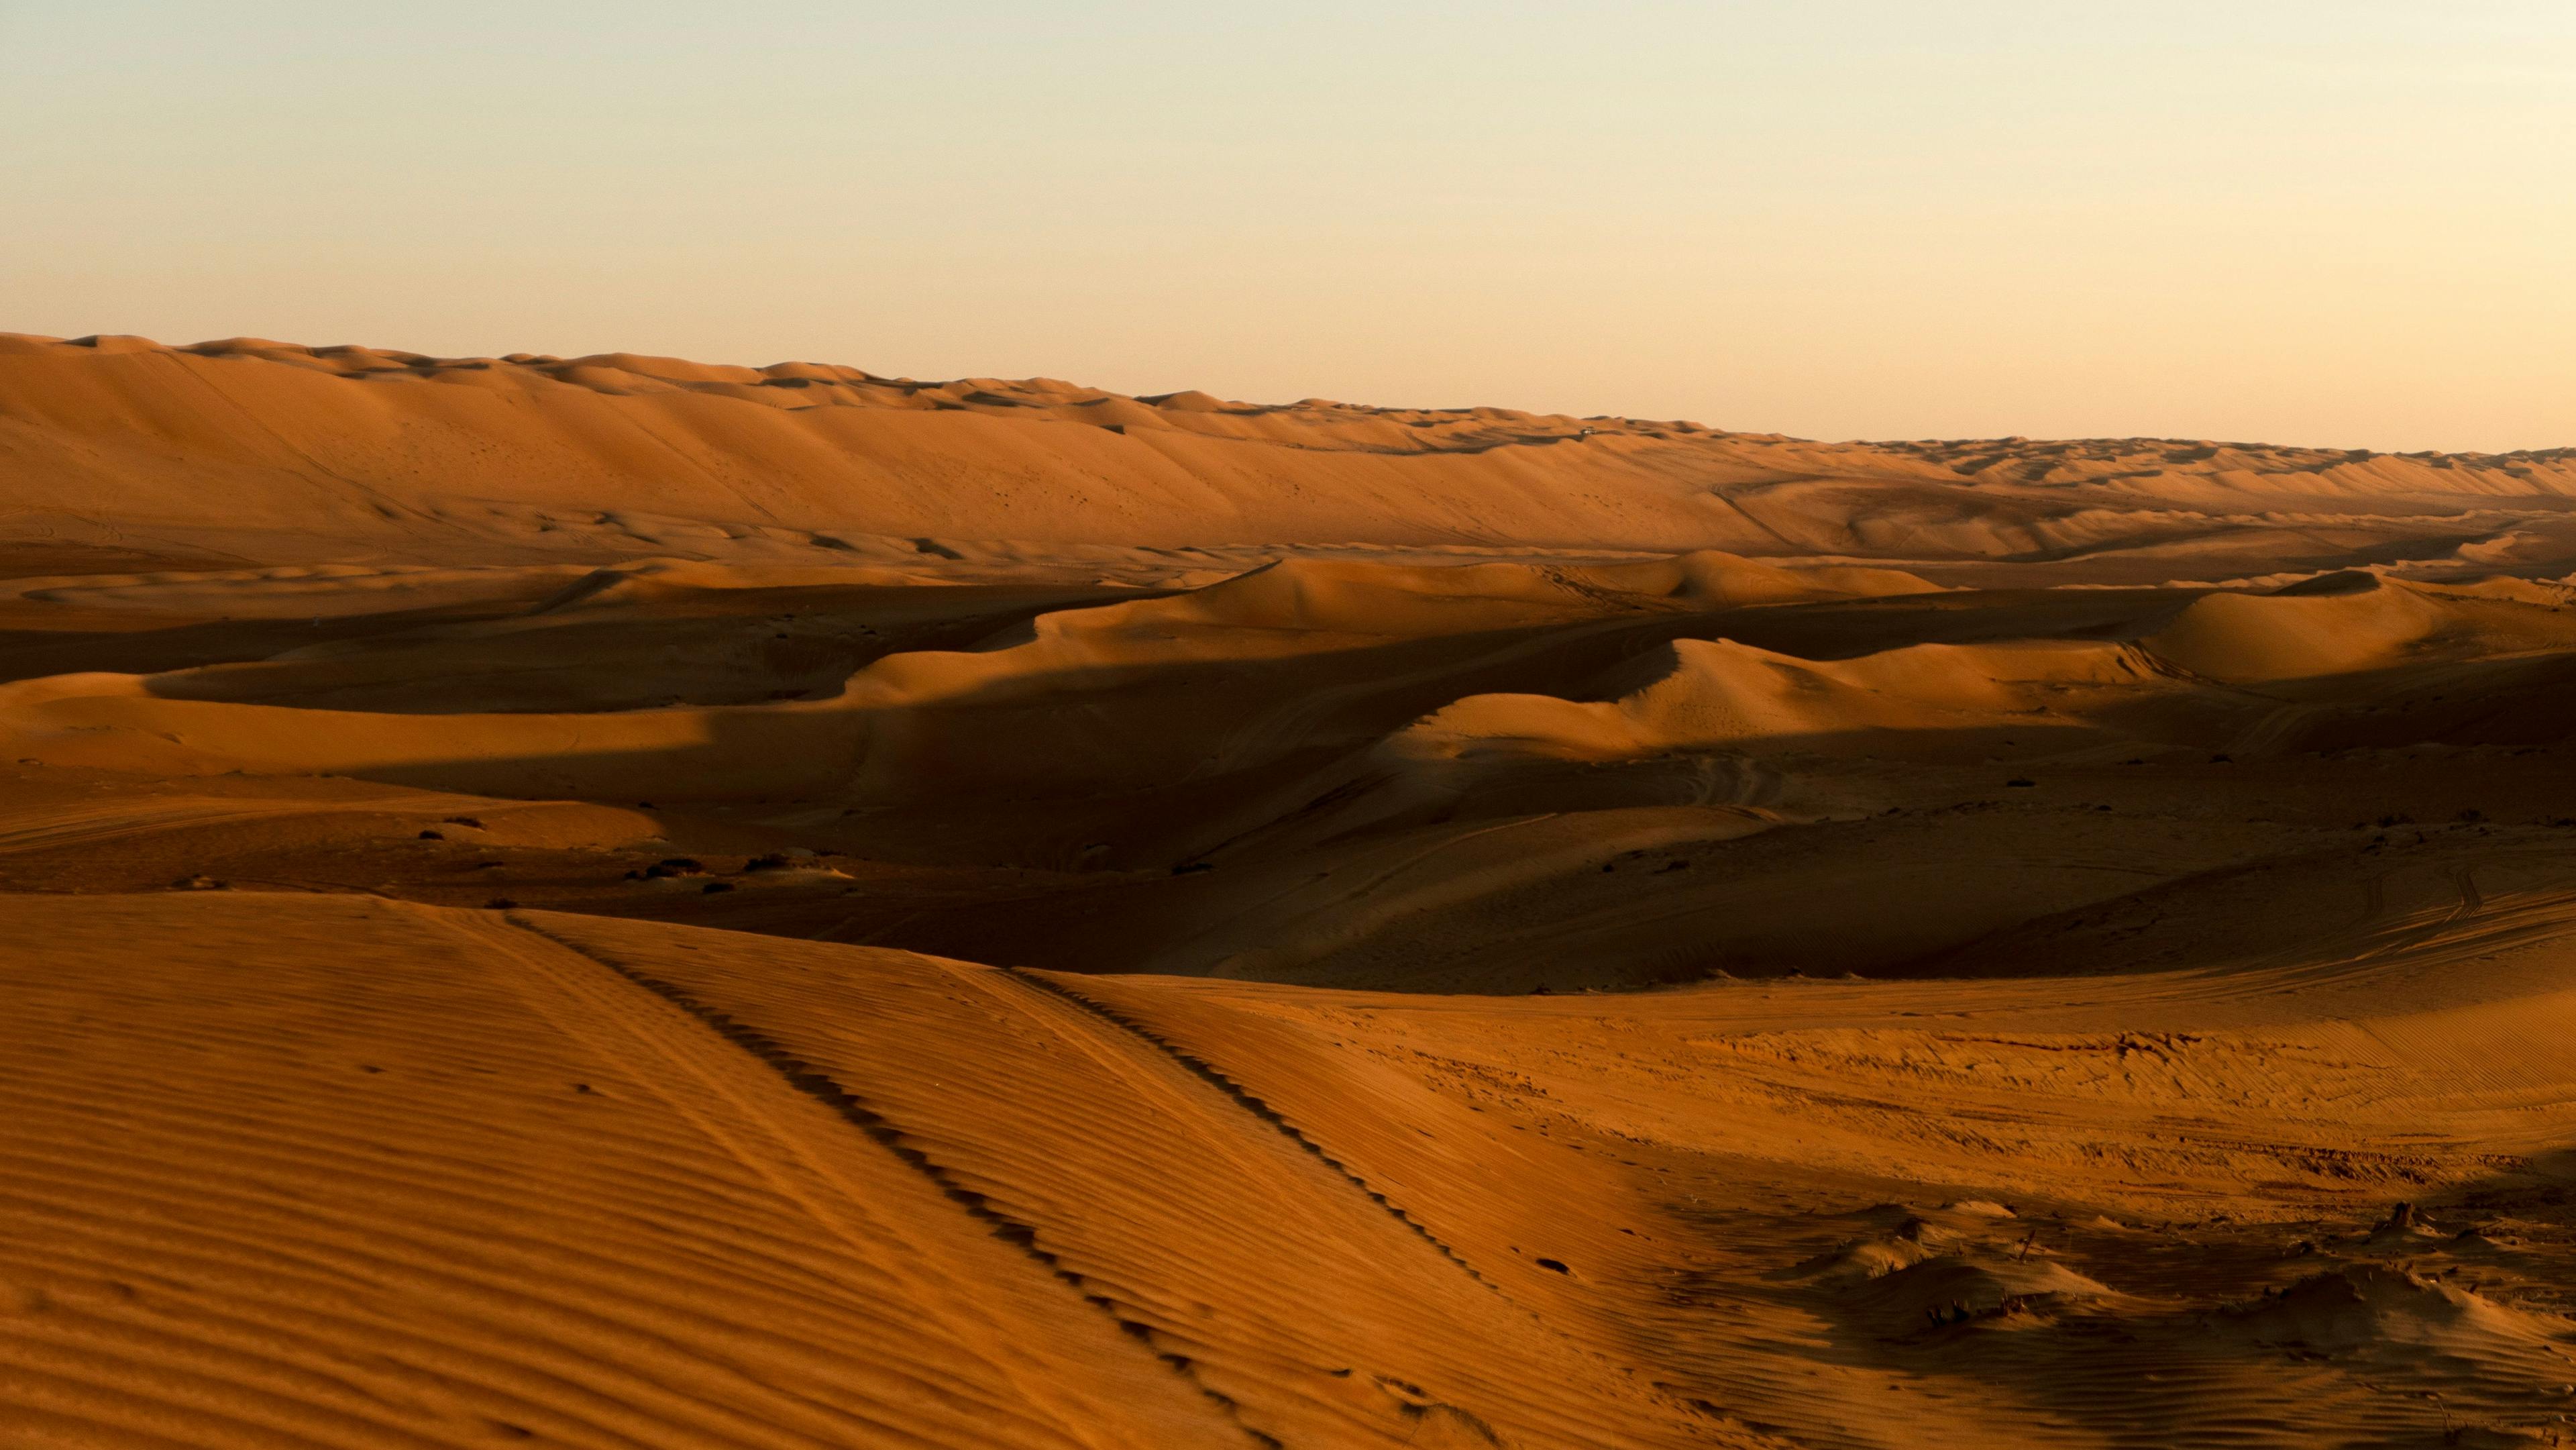 Wahiba Sands desert in Oman.